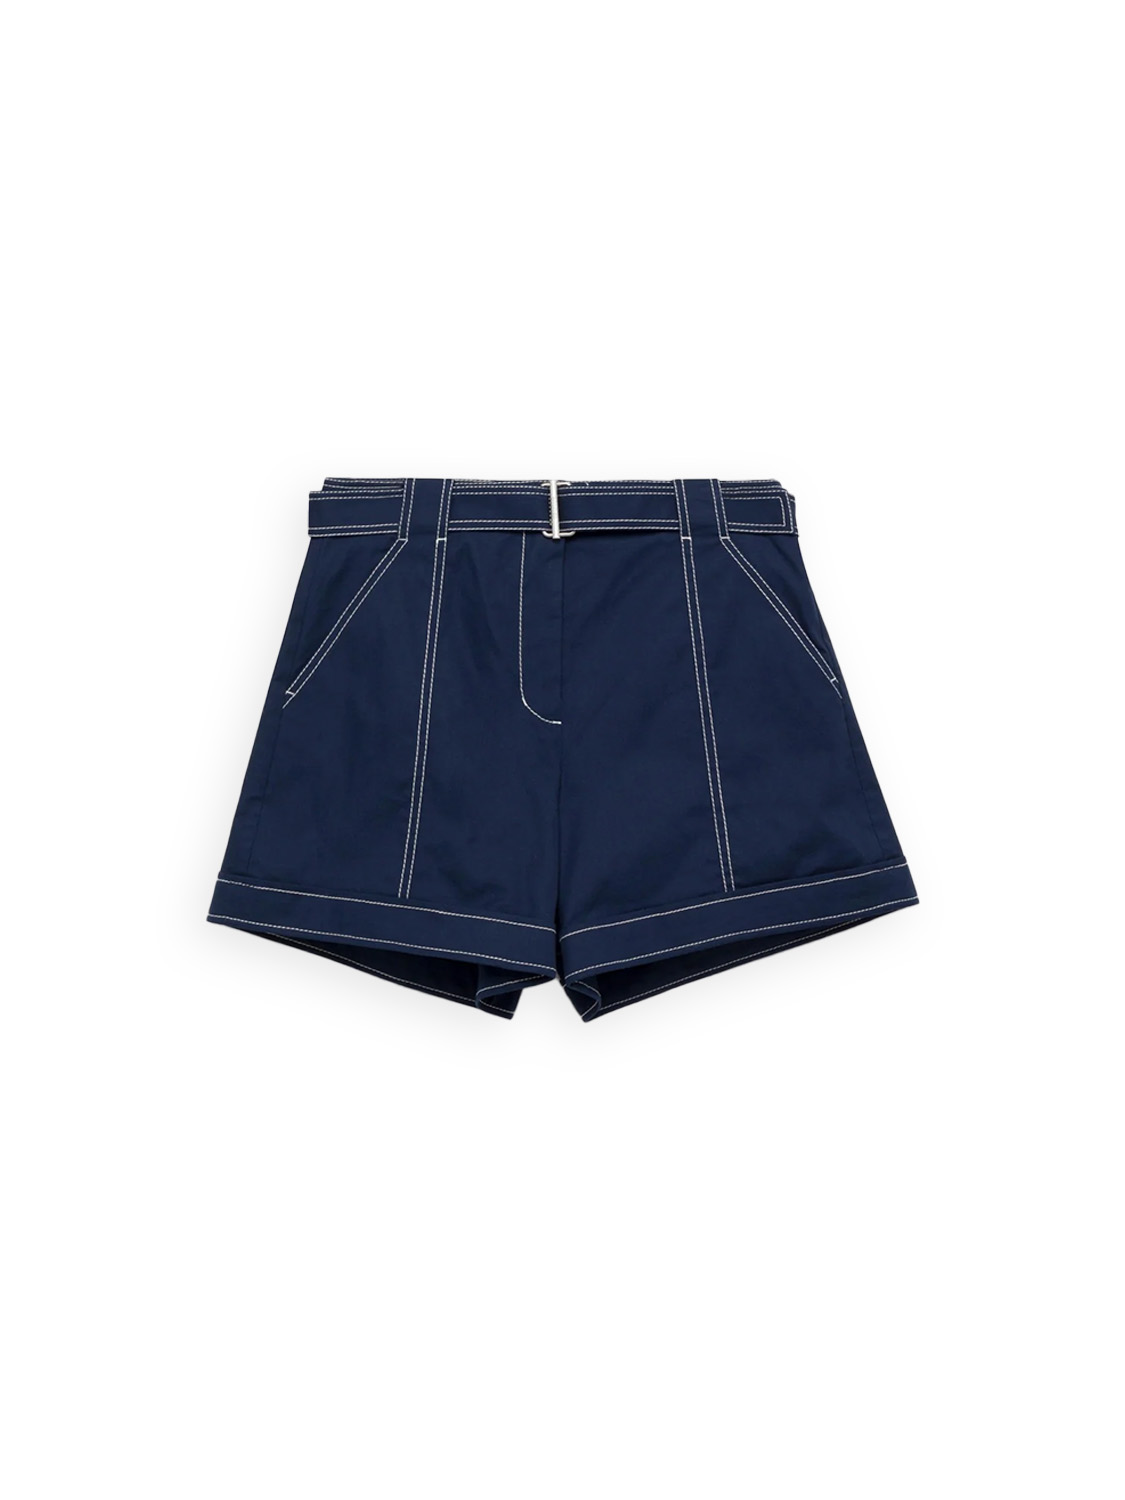 Simkhai Lourie – Shorts mit weißen Nahtdetail  blau 34